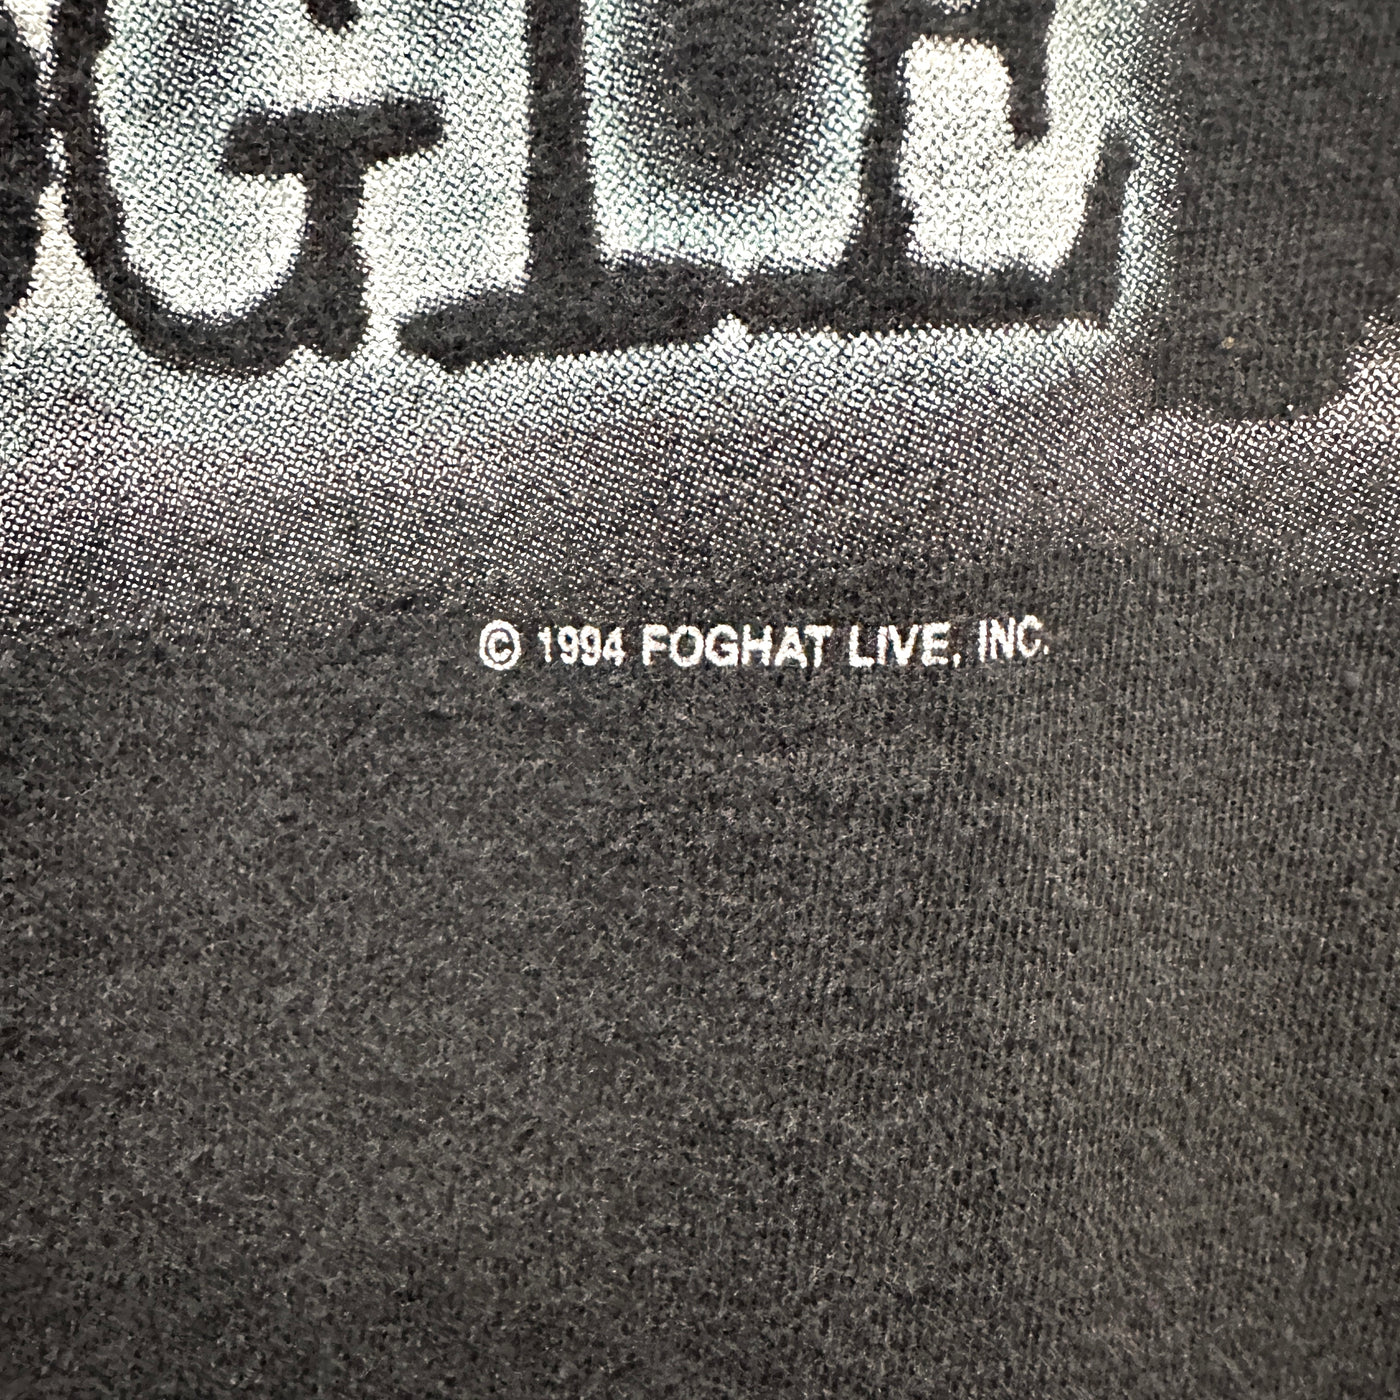 '94 Foghat Return Of The Boogie Men Black Music T-shirt sz M